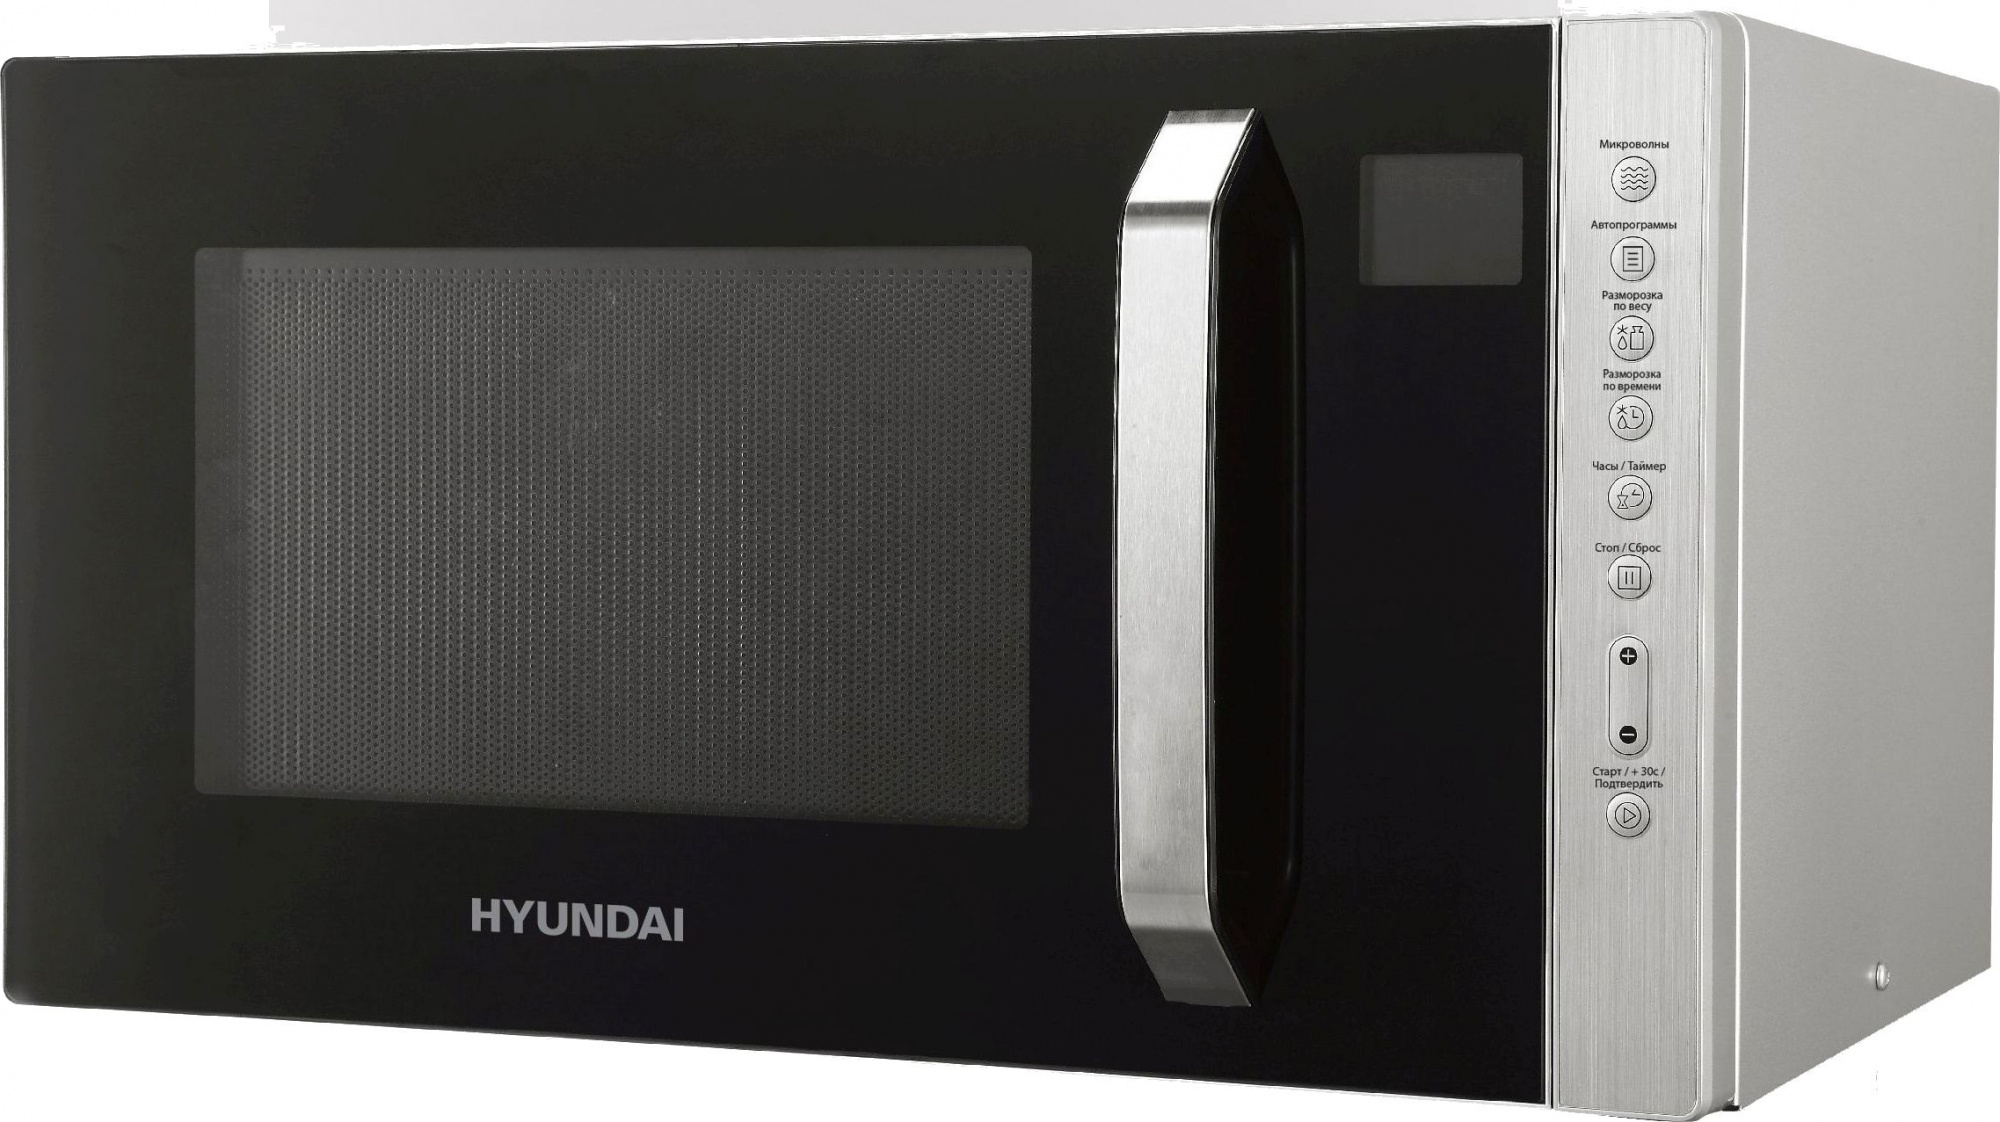 Микроволновая печь hyundai купить. Микроволновая печь Hyundai HYM-m2001. Микроволновая печь Hyundai HYM-m2066, 800вт, 23л, серебристый. Микроволновая печь Hyundai HYM-m2001 Silver. Микроволновка Хендай 800 Вт.